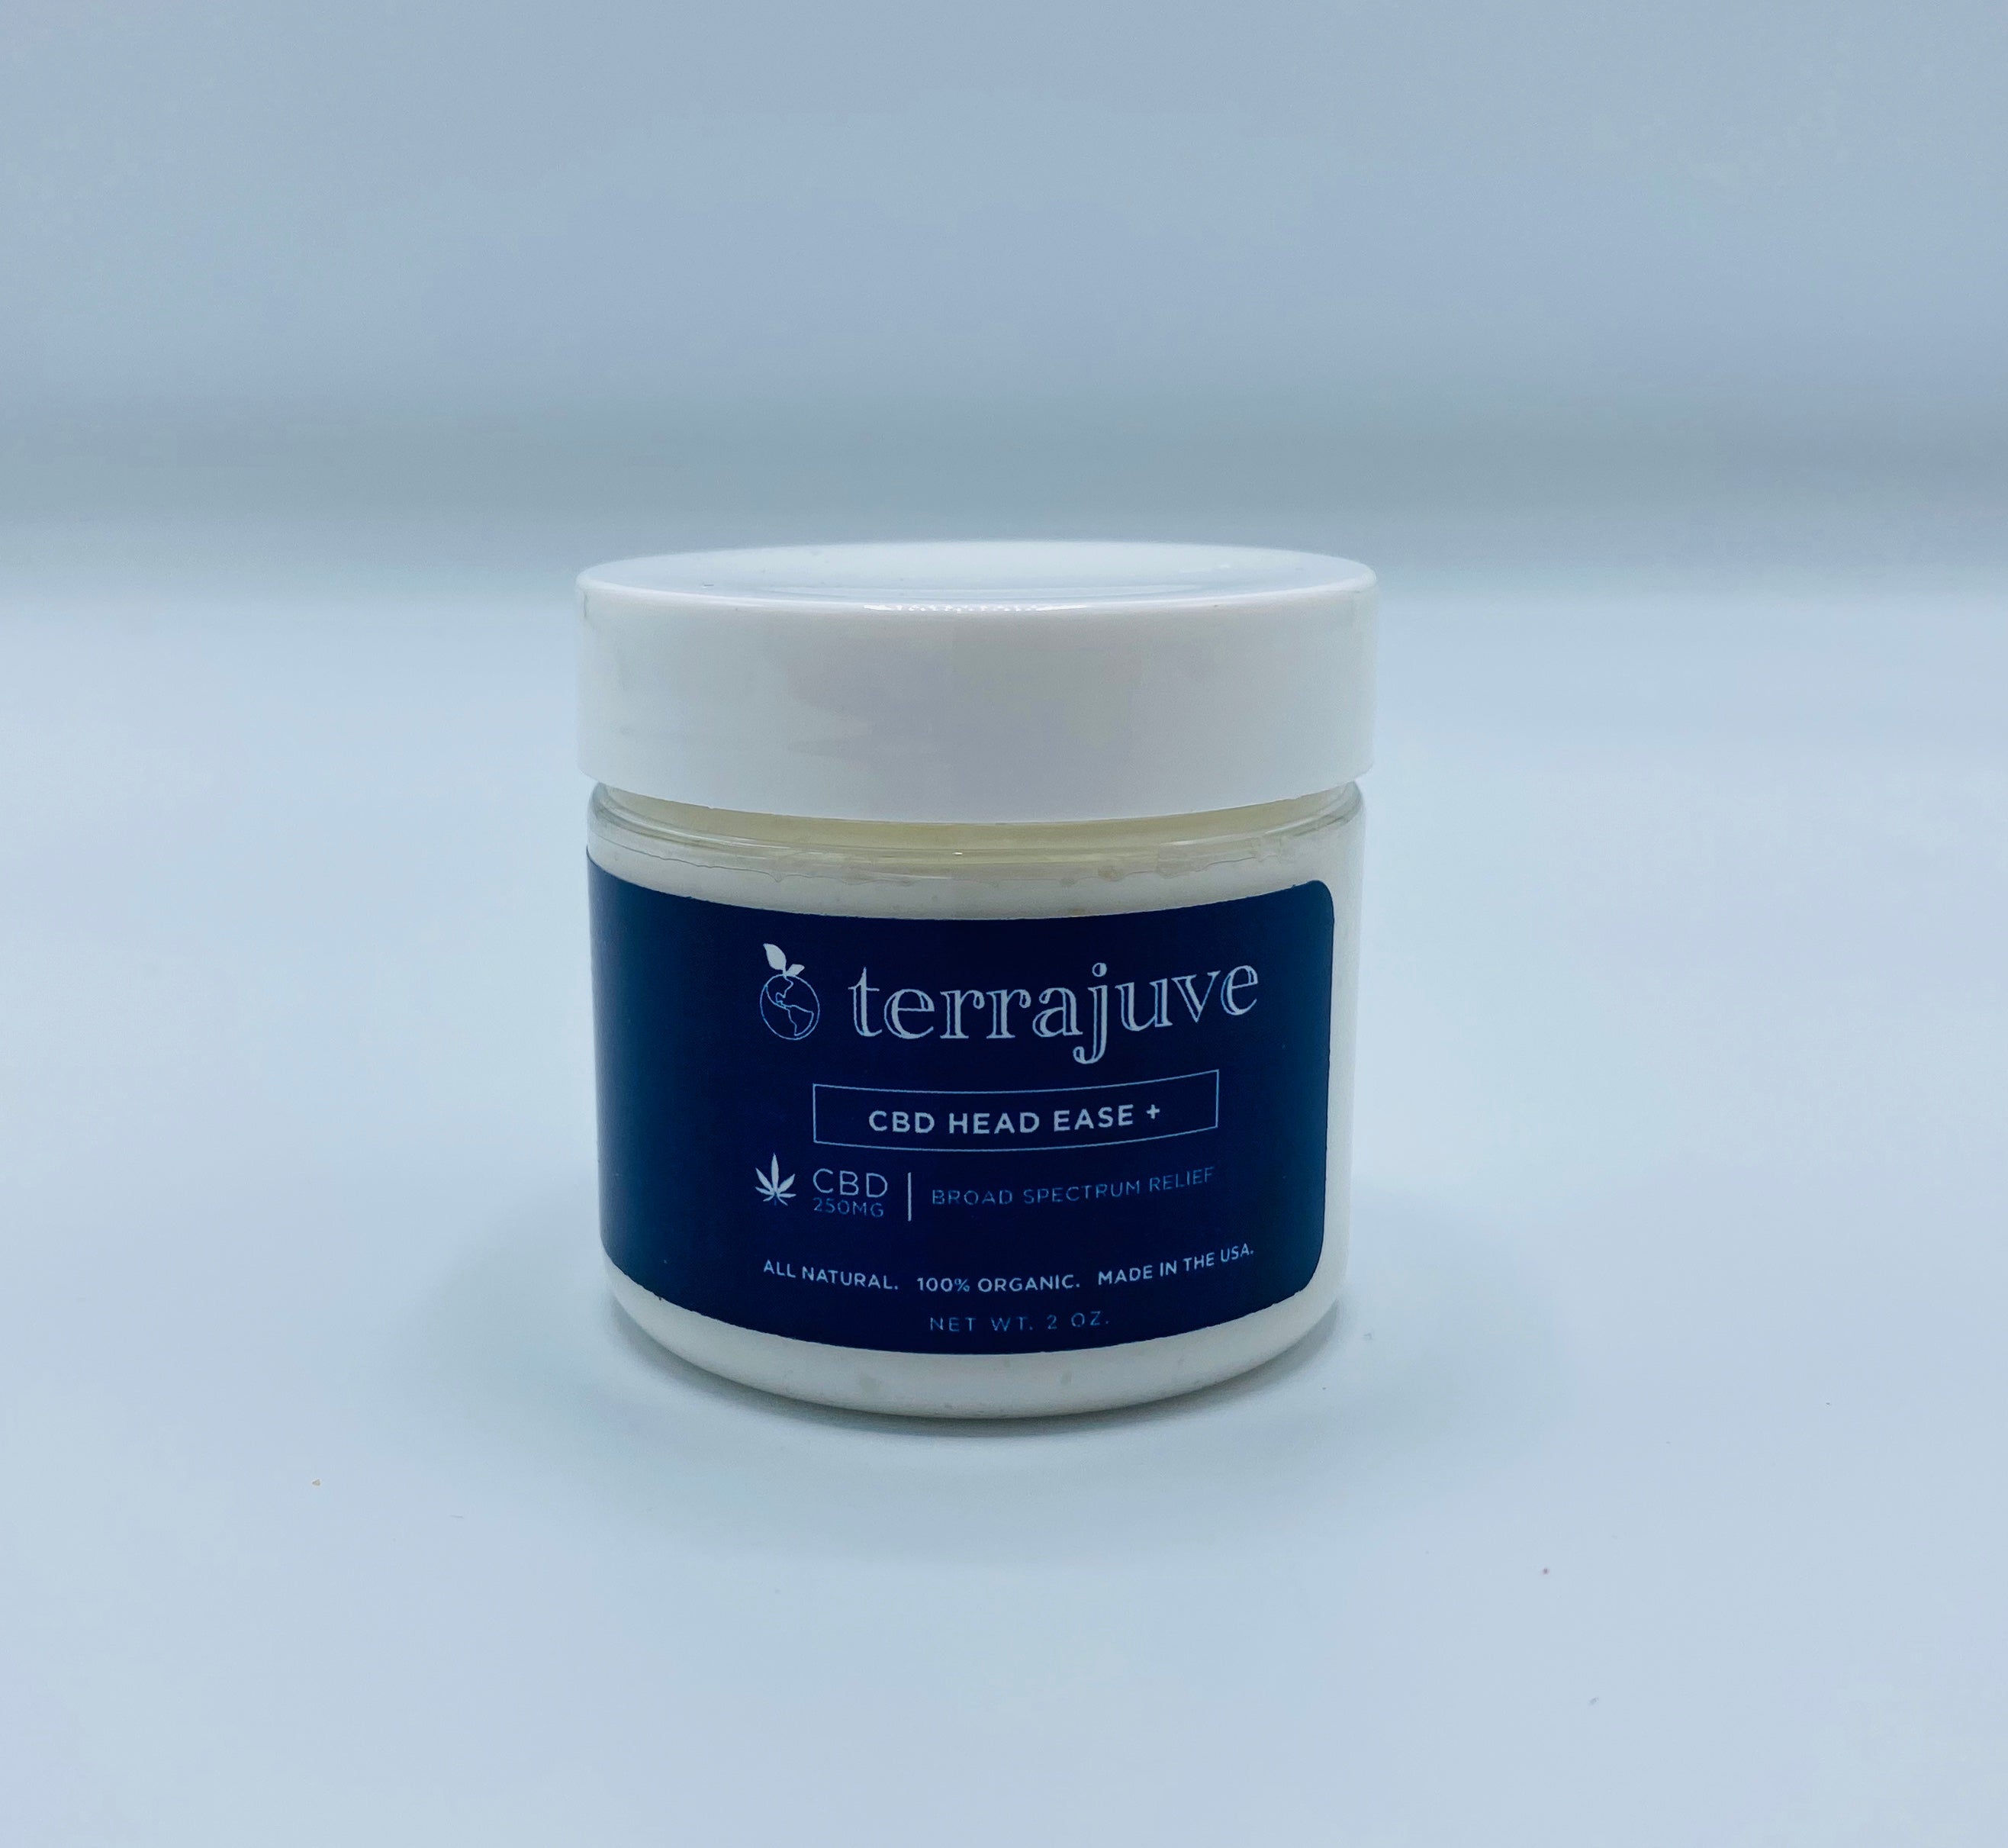 CBD Head Ease+ Cream, Broad Spectrum Relief by Terrajuve